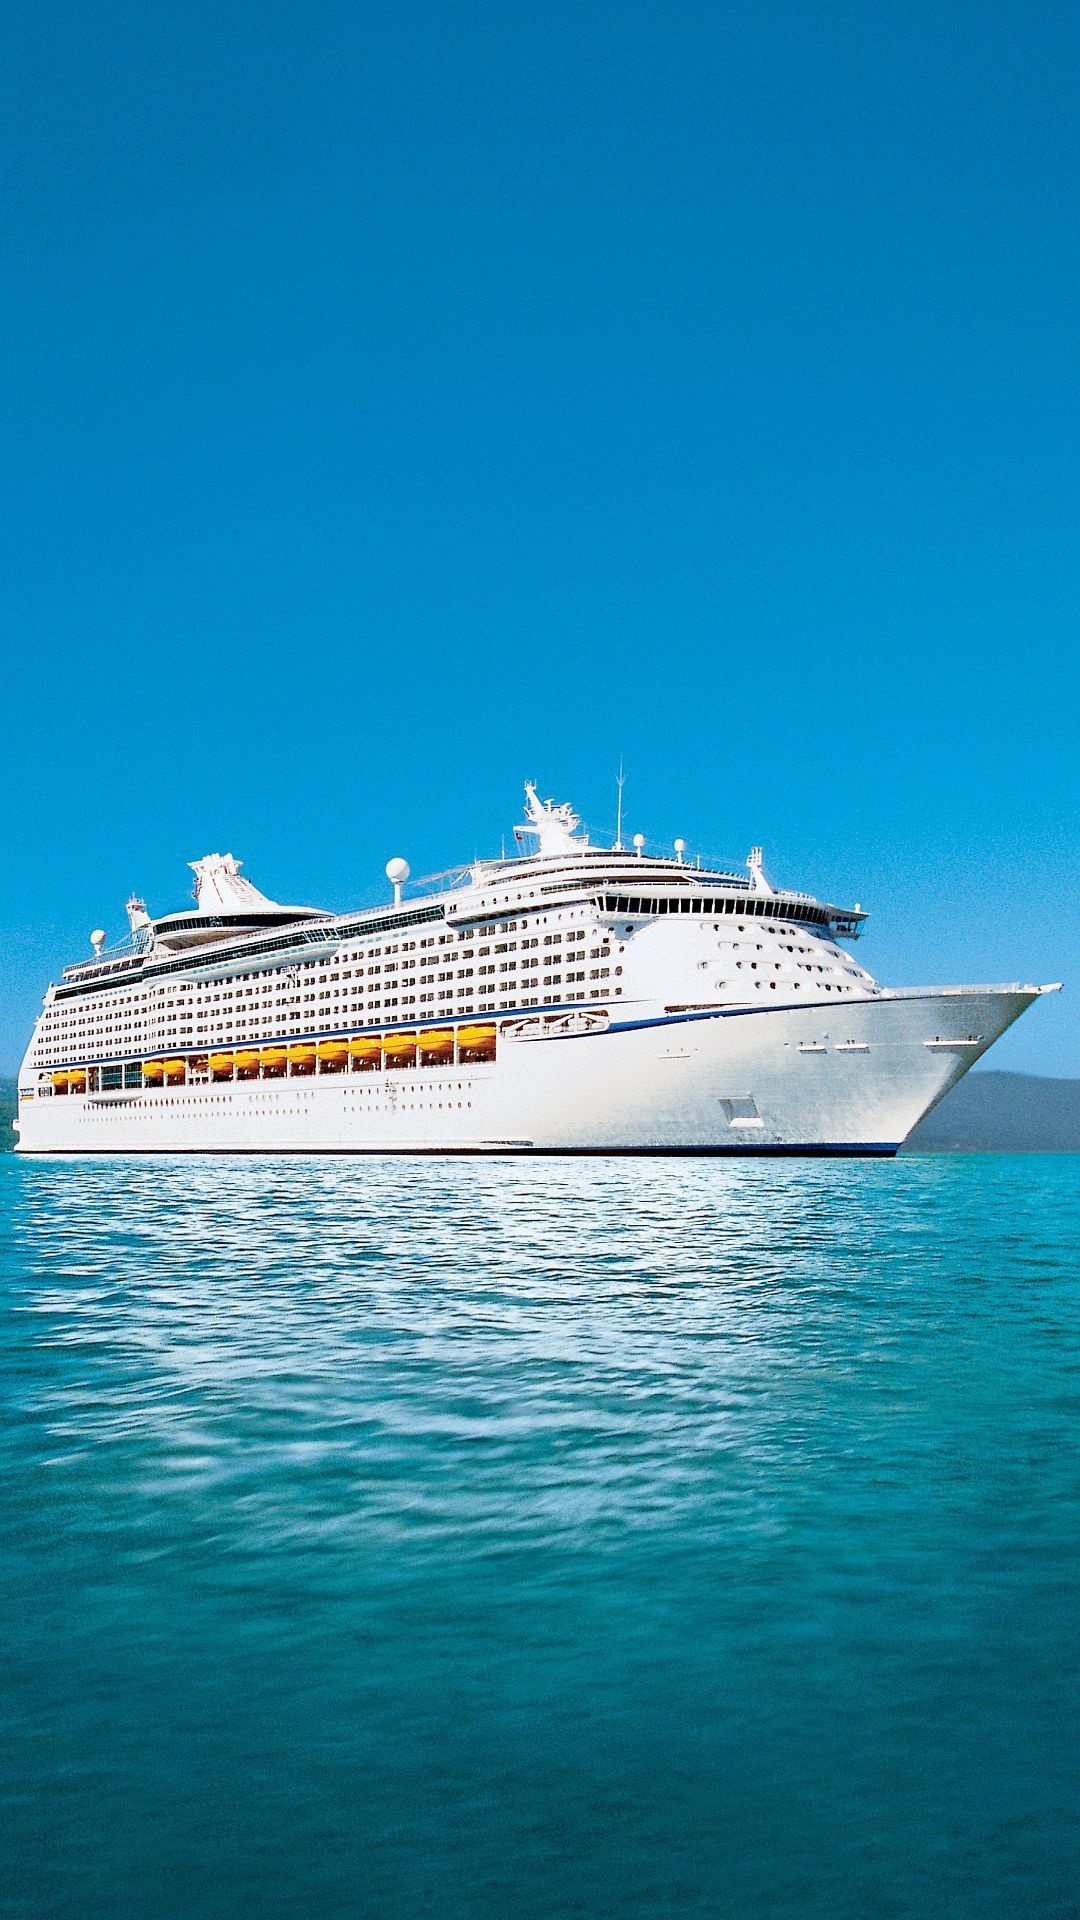 Cruiser (Ship): Royal Caribbean, A vessel transporting passengers between continents. 1080x1920 Full HD Wallpaper.